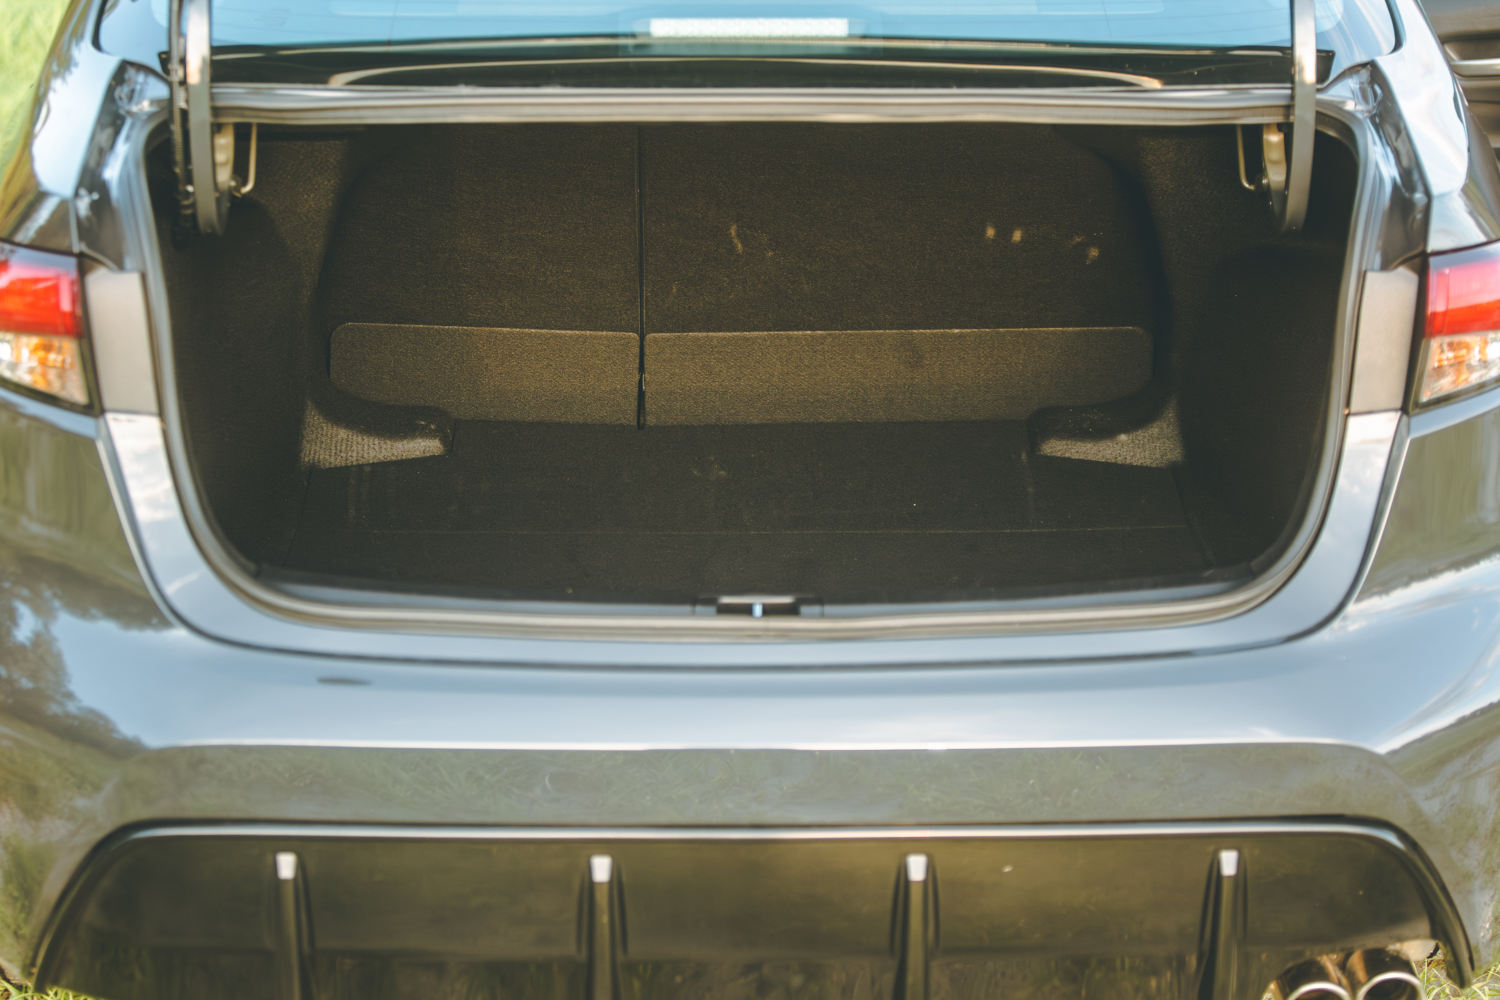 The sedan's trunk